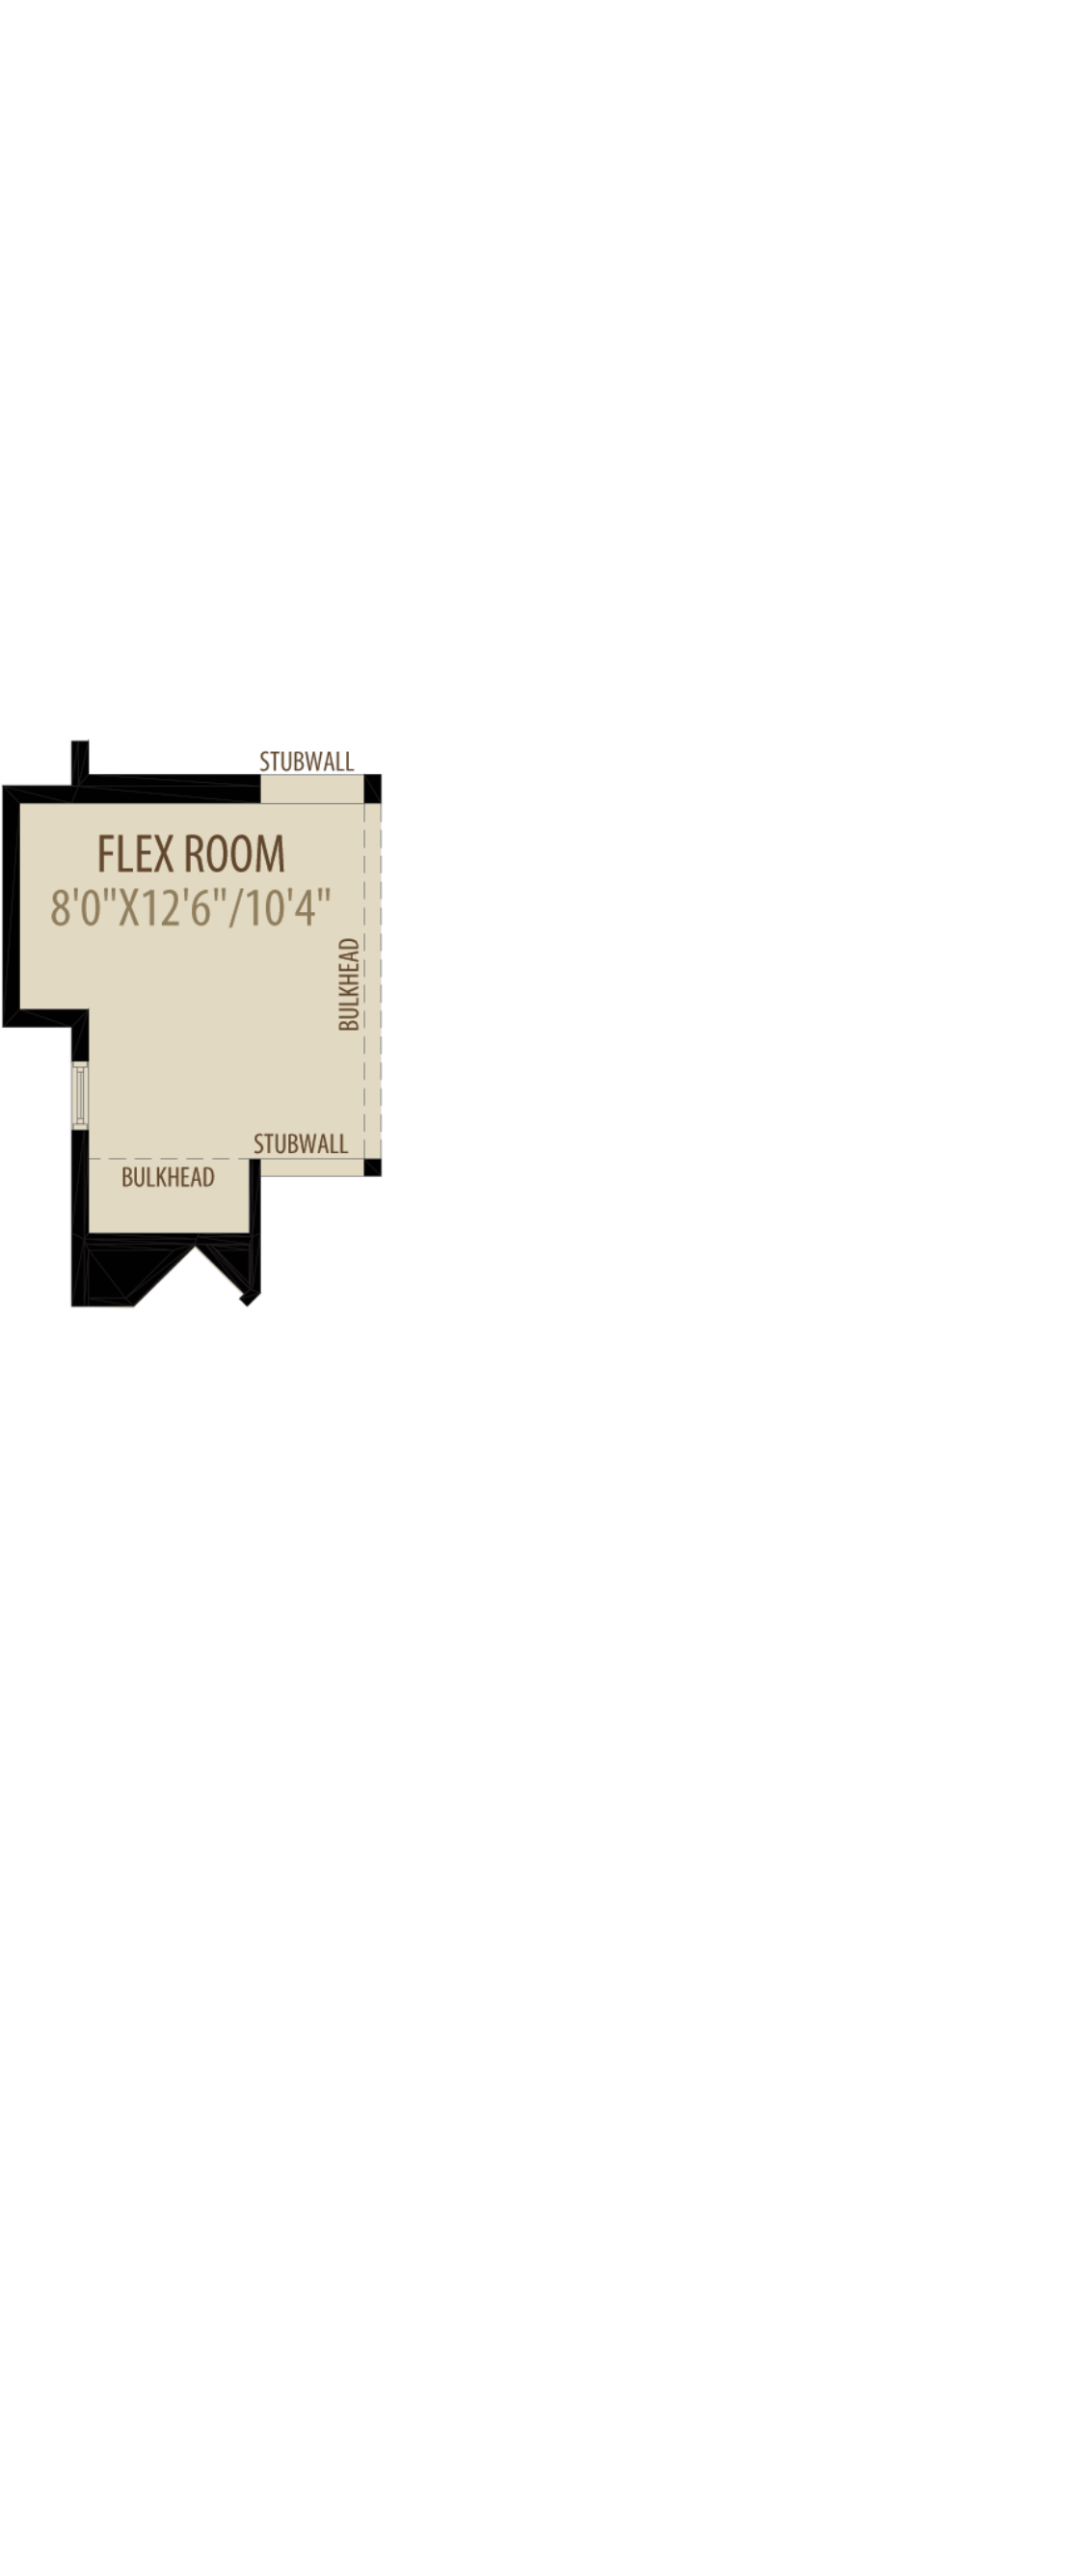 Flex Room Cantilever adds 14 sq ft